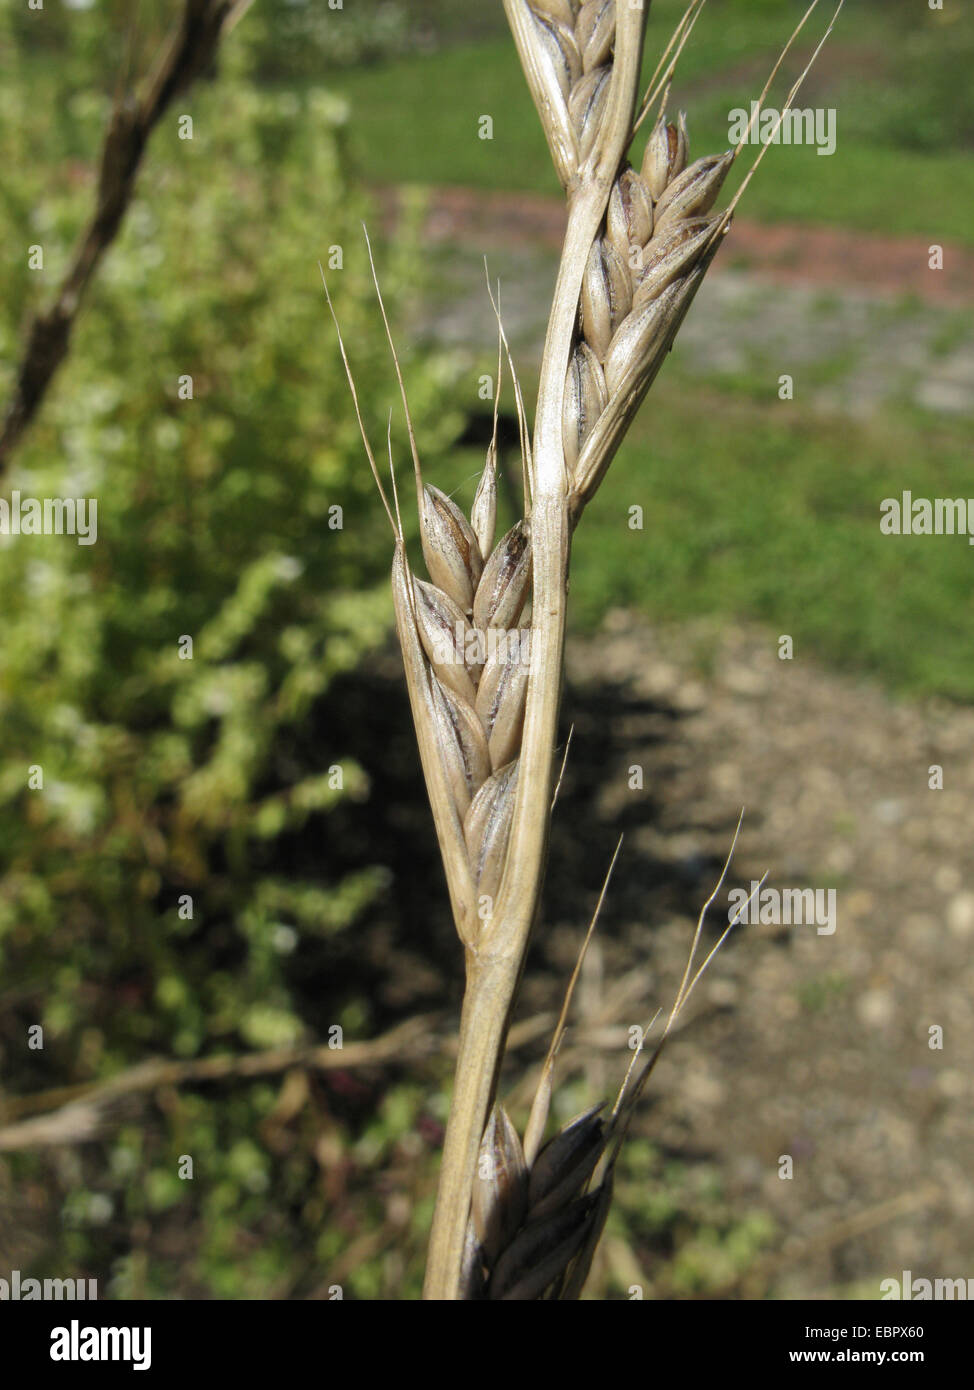 bearded darnel, poison rye-grass (Lolium temulentum), ripe spikelets, Germany Stock Photo